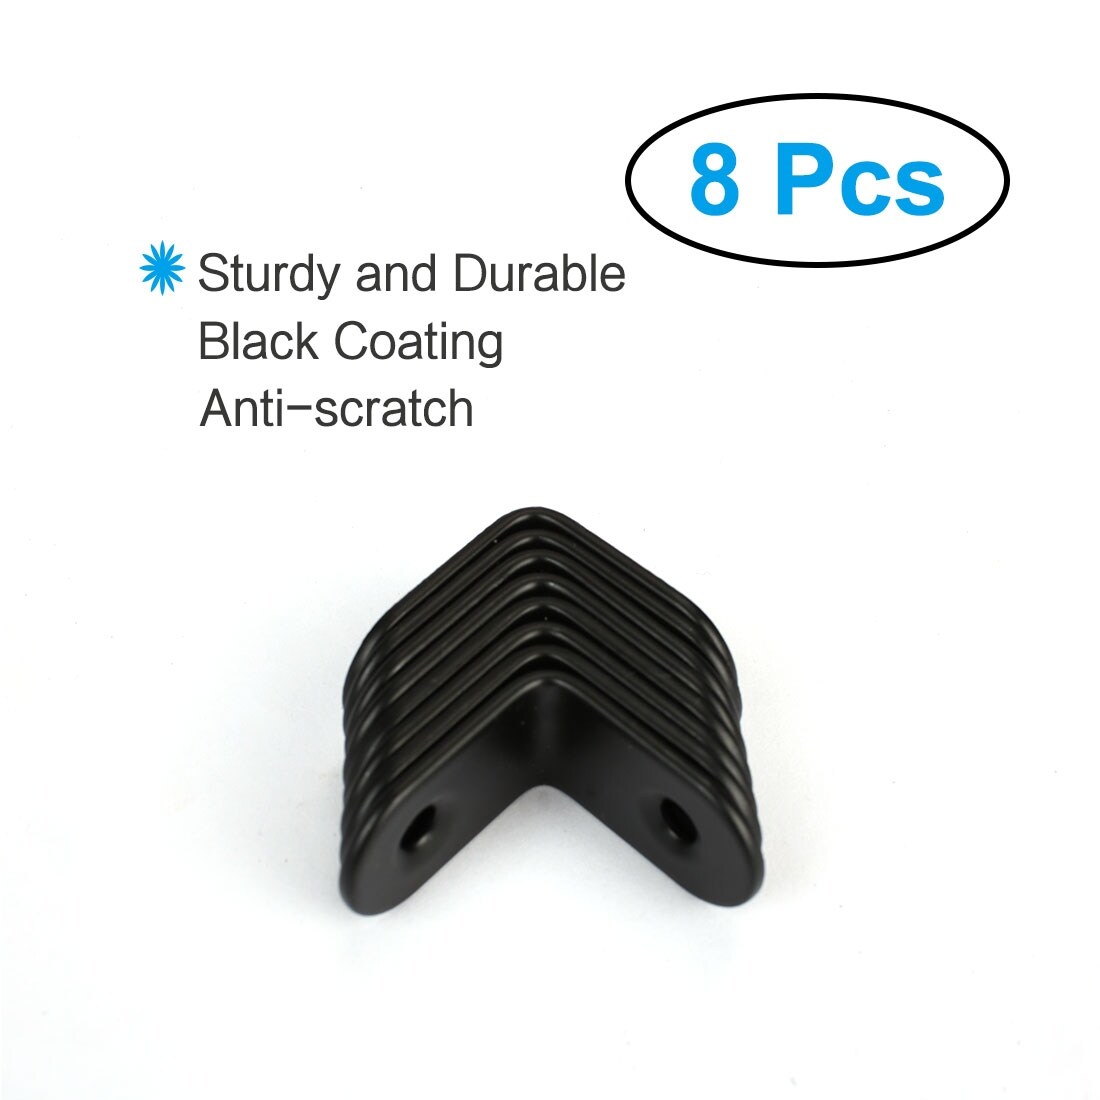 Metal Angle Brackets for DIY Shelve Cabinet Stainless Steel Brace,8pcs - Black - 1" x 1" x 0.63"(L*W*H)